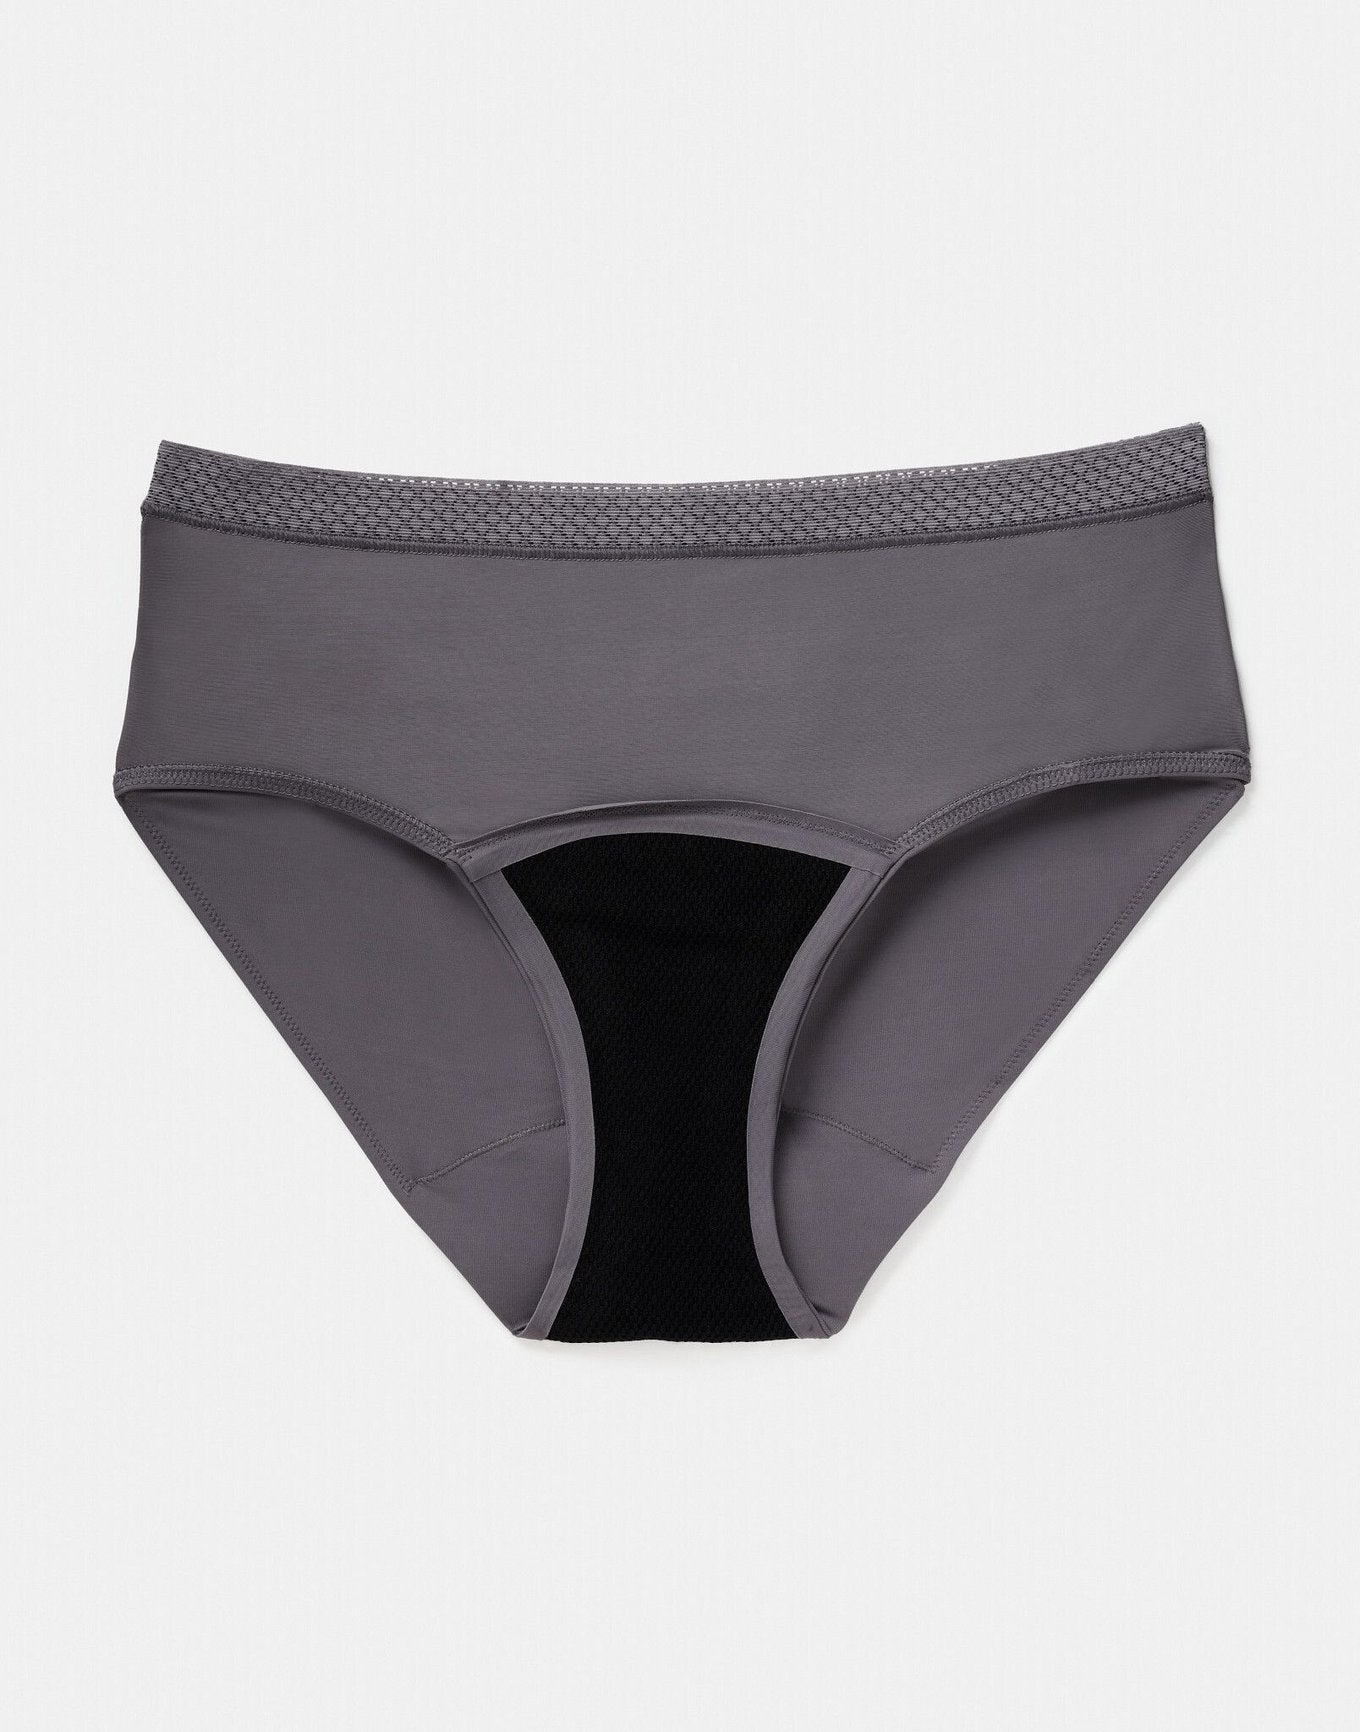 Thinx BTWN) Teen Period Underwear - Bikini Panties, Grey, 13/14